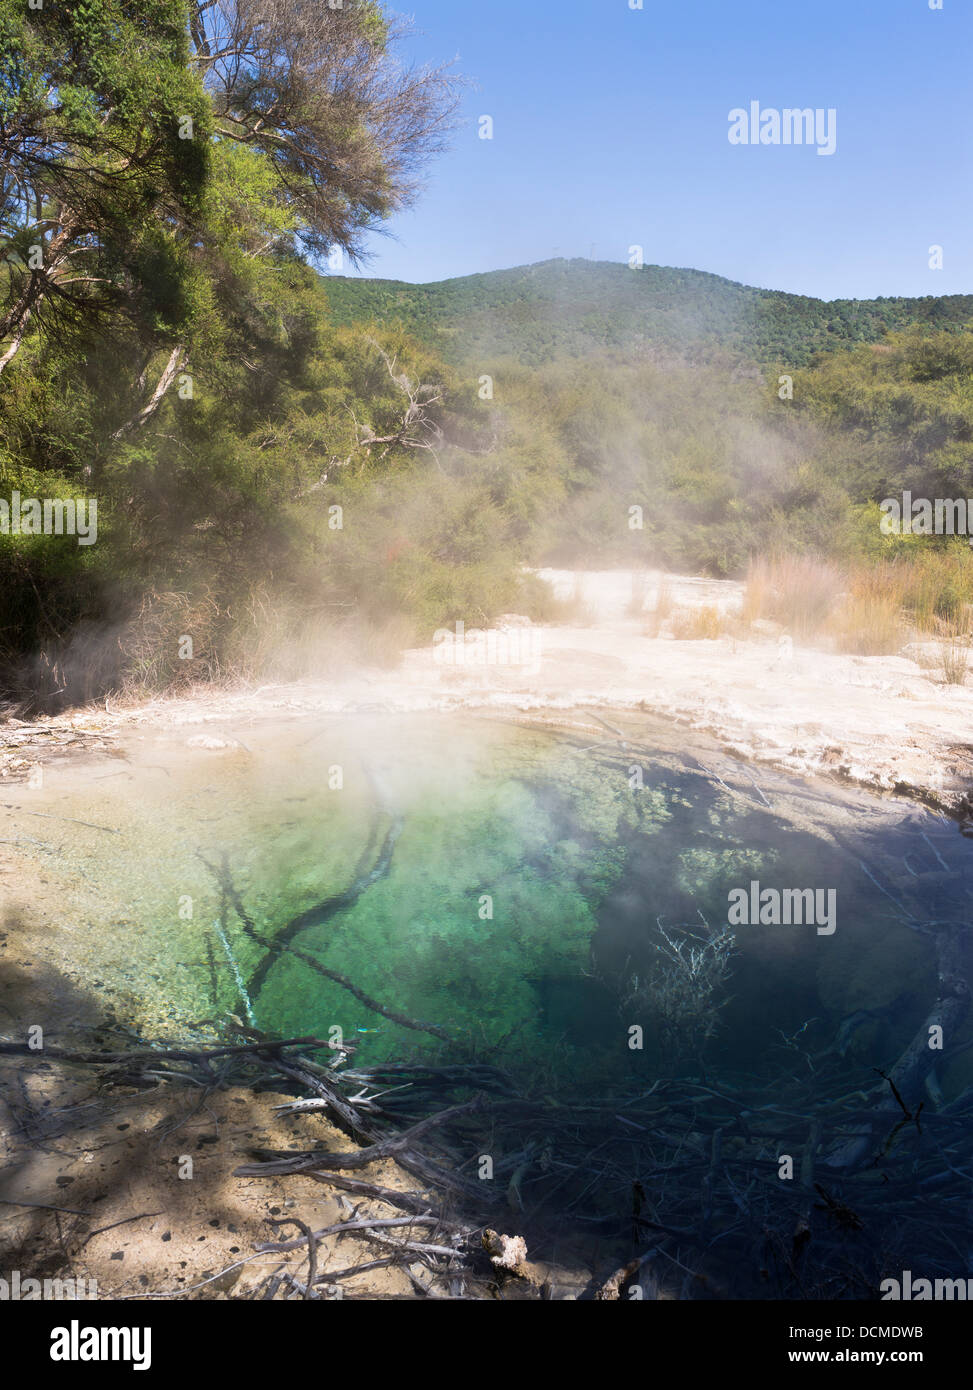 dh Tokaanu thermal walk TOKAANU NEW ZEALAND Recreation Reserve thermal pool steaming hot mineral pools spring water springs geothermal Stock Photo